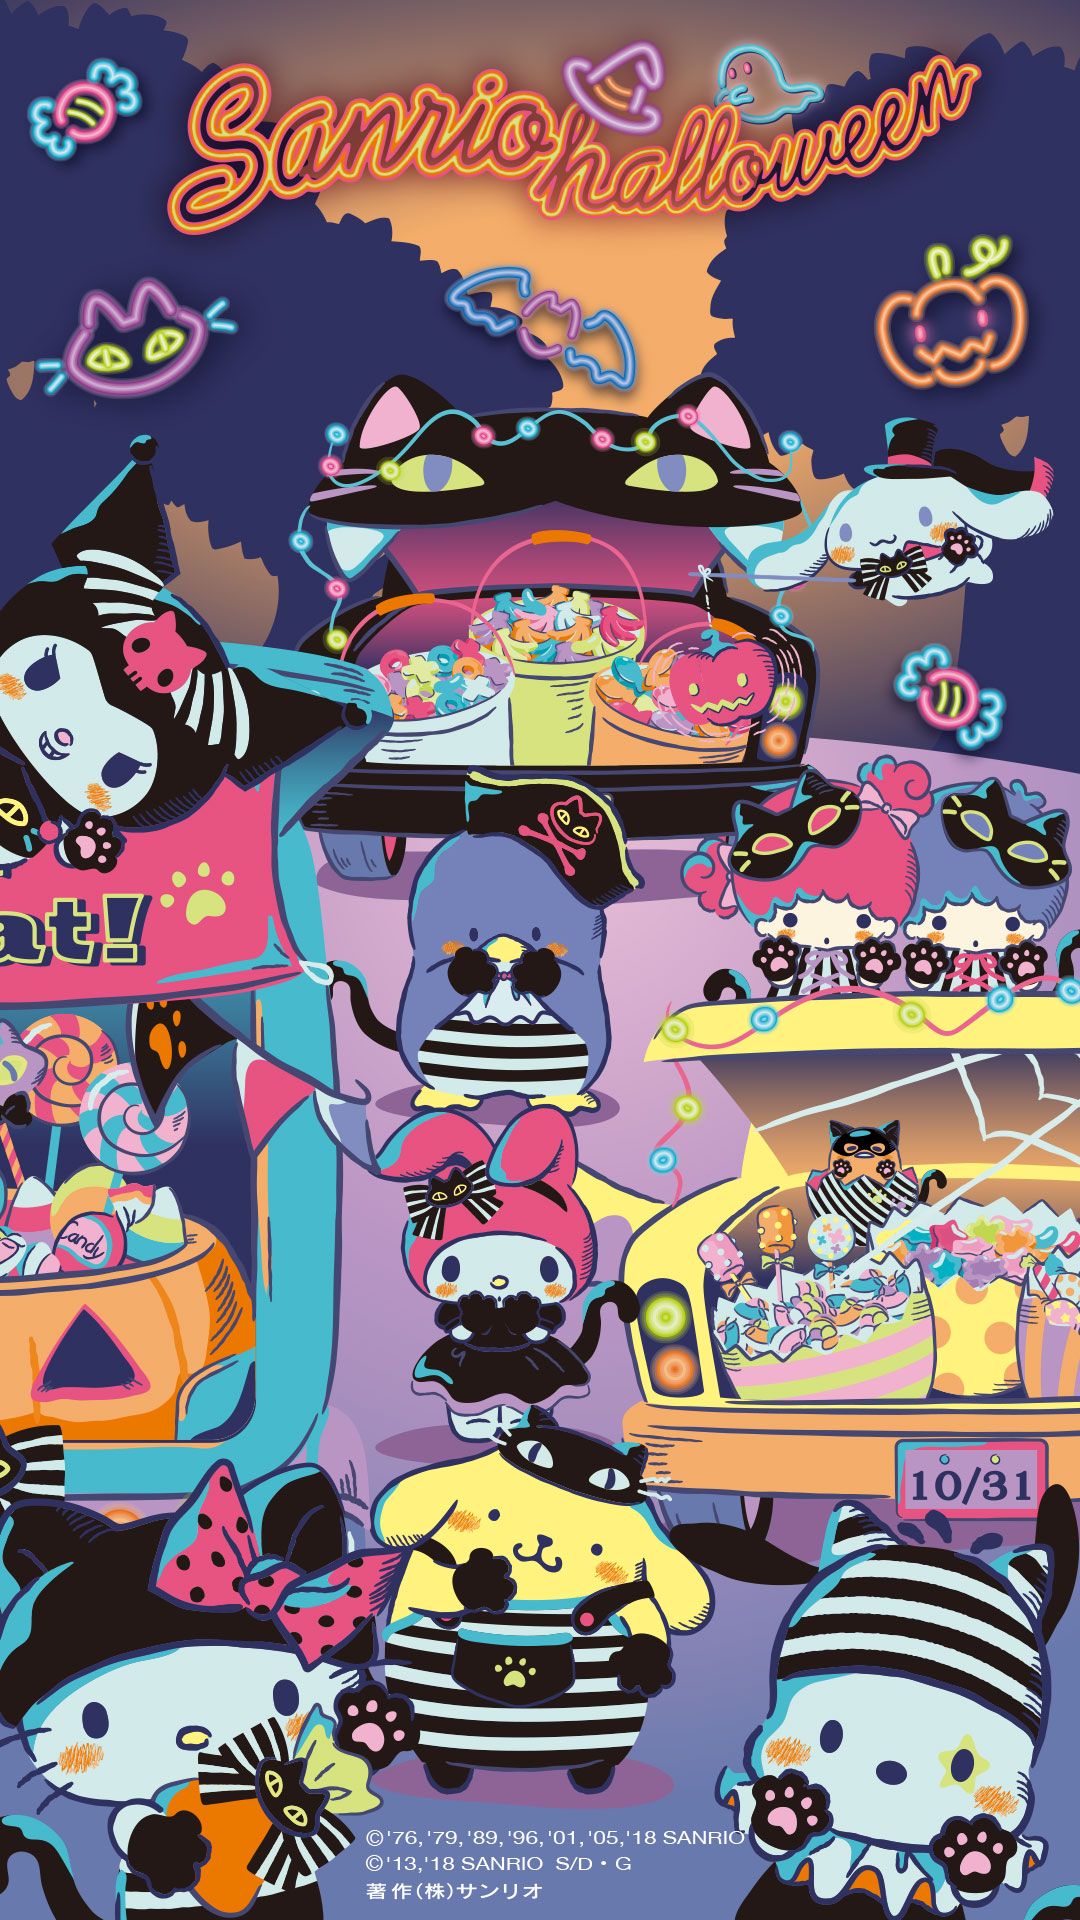 1080×1920】201810 Sanrio Halloween Special. Hello kitty halloween wallpaper, Hello kitty halloween, Hello kitty iphone wallpaper